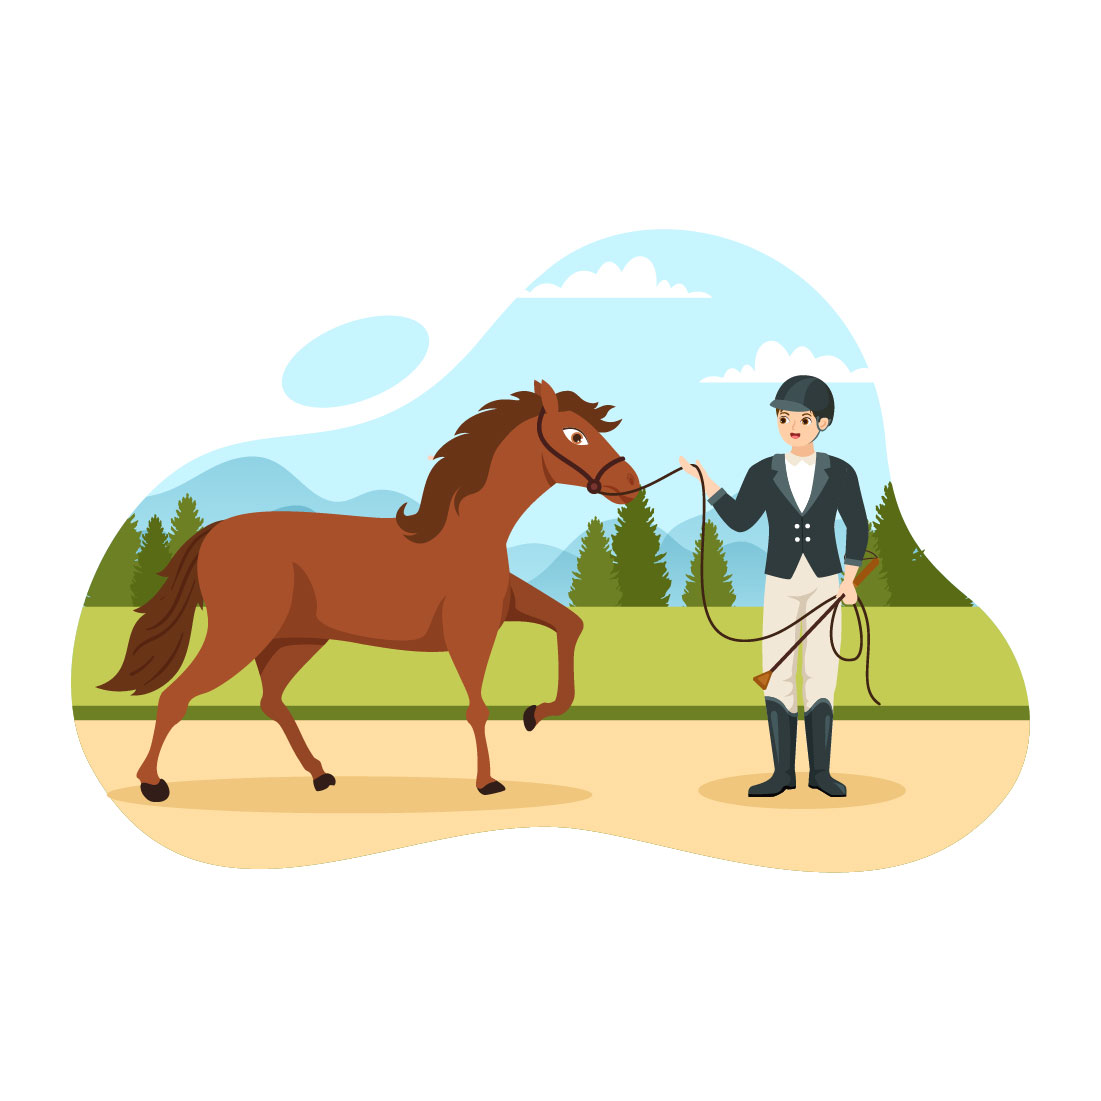 Equestrian Sport Horse Trainer Illustration cover image.